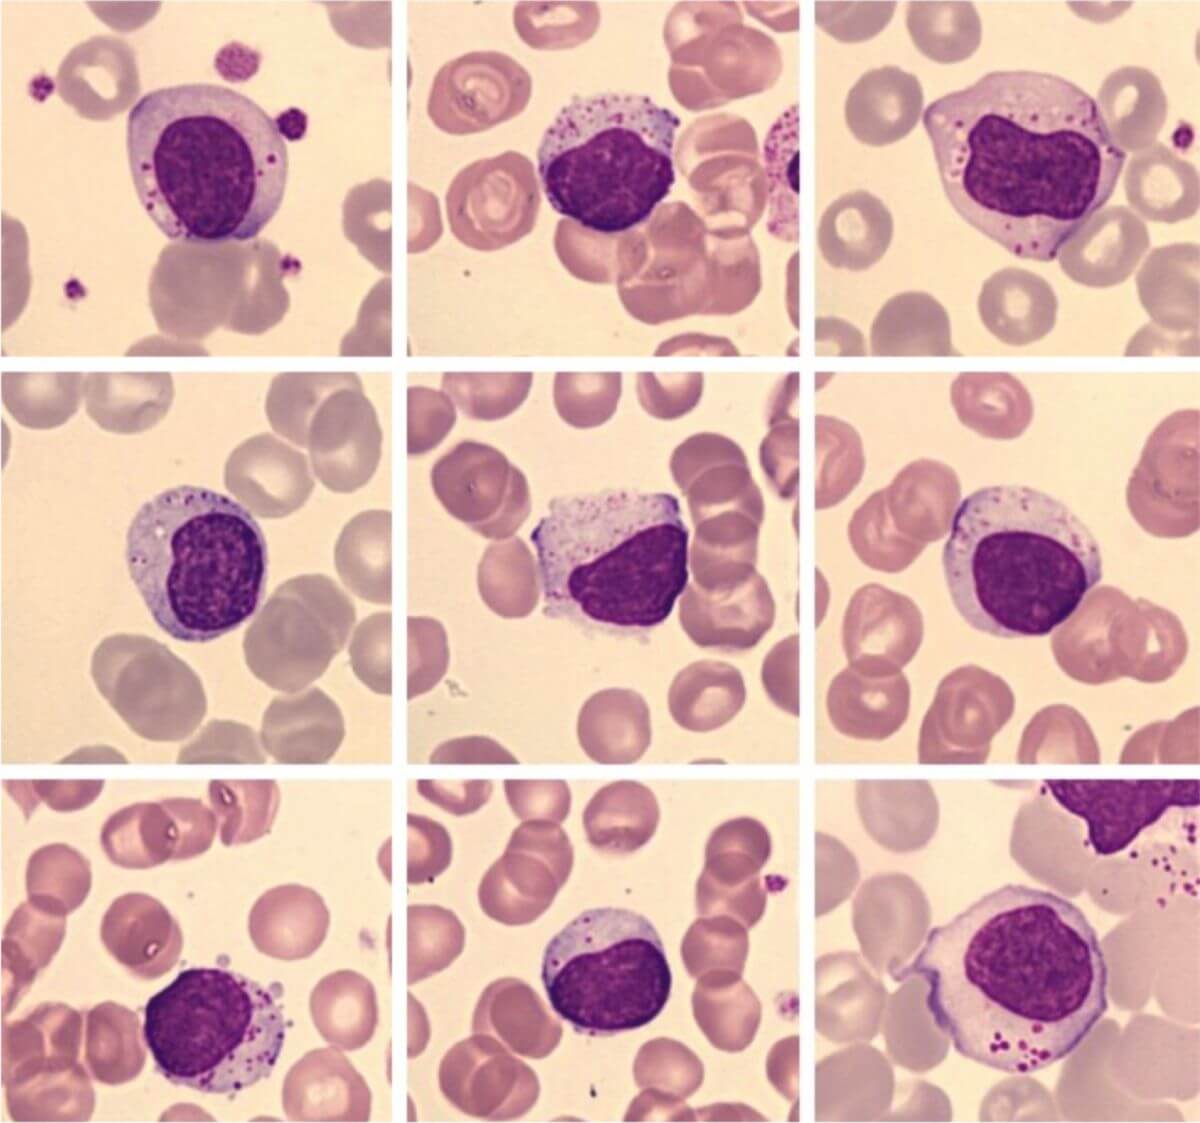 Large granular lymphocytes